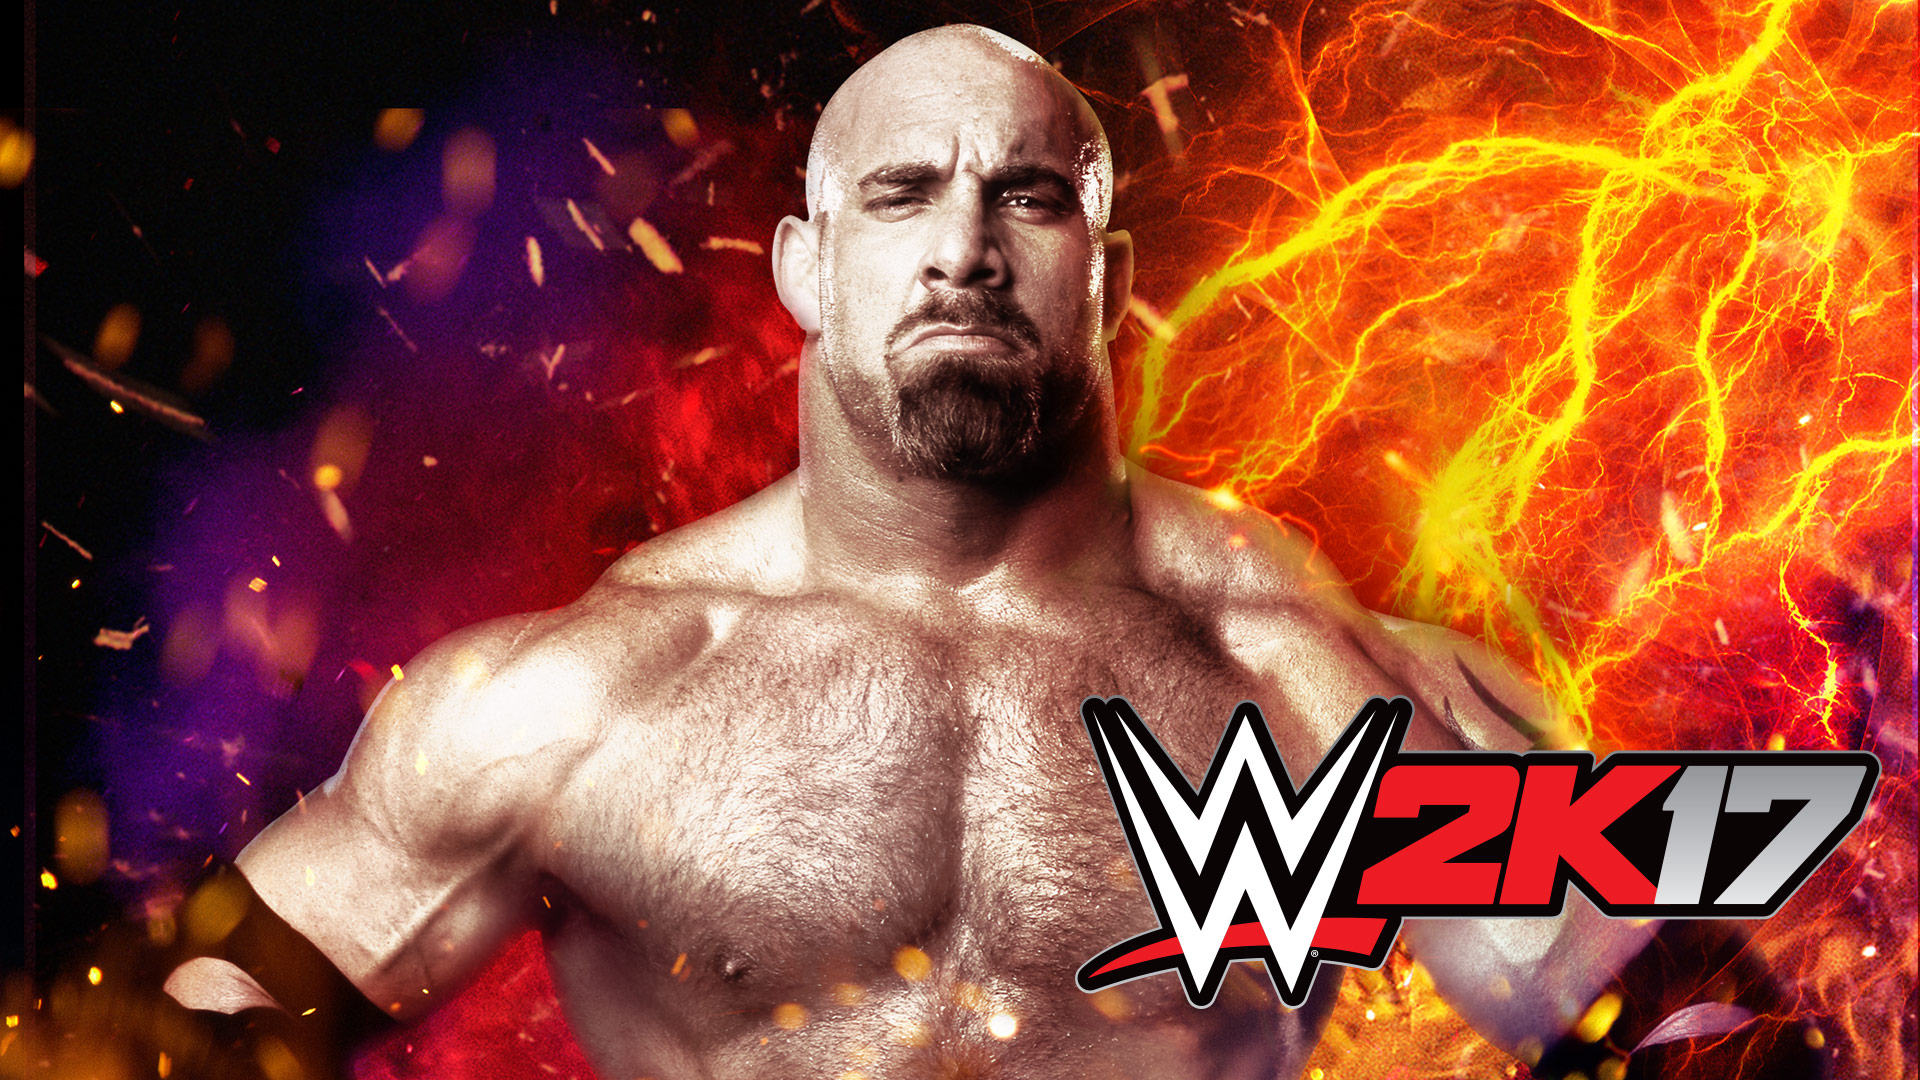 Video Game WWE 2K17 HD Wallpaper | Background Image